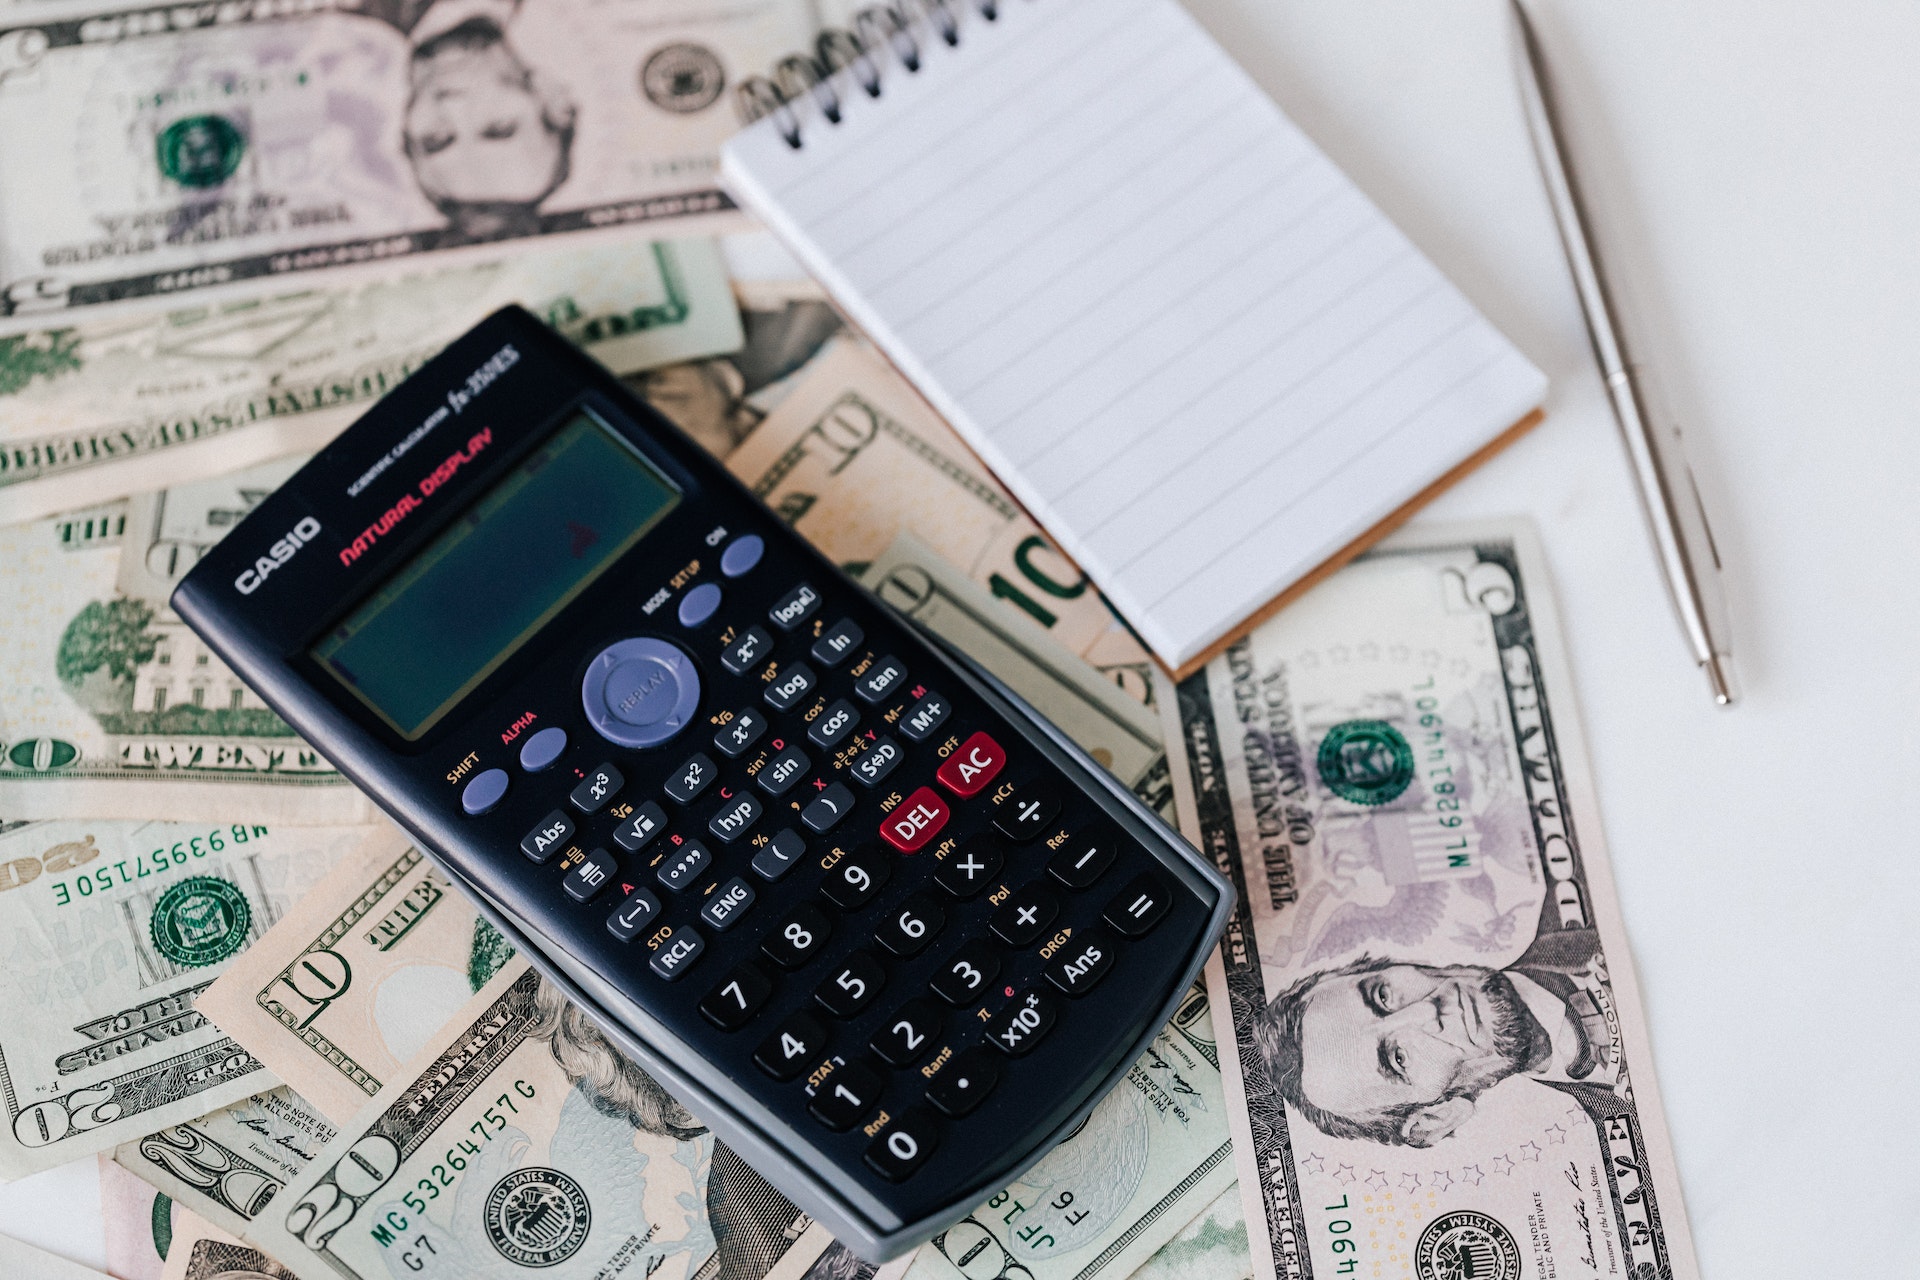 A Calculator and a notepad above money bills